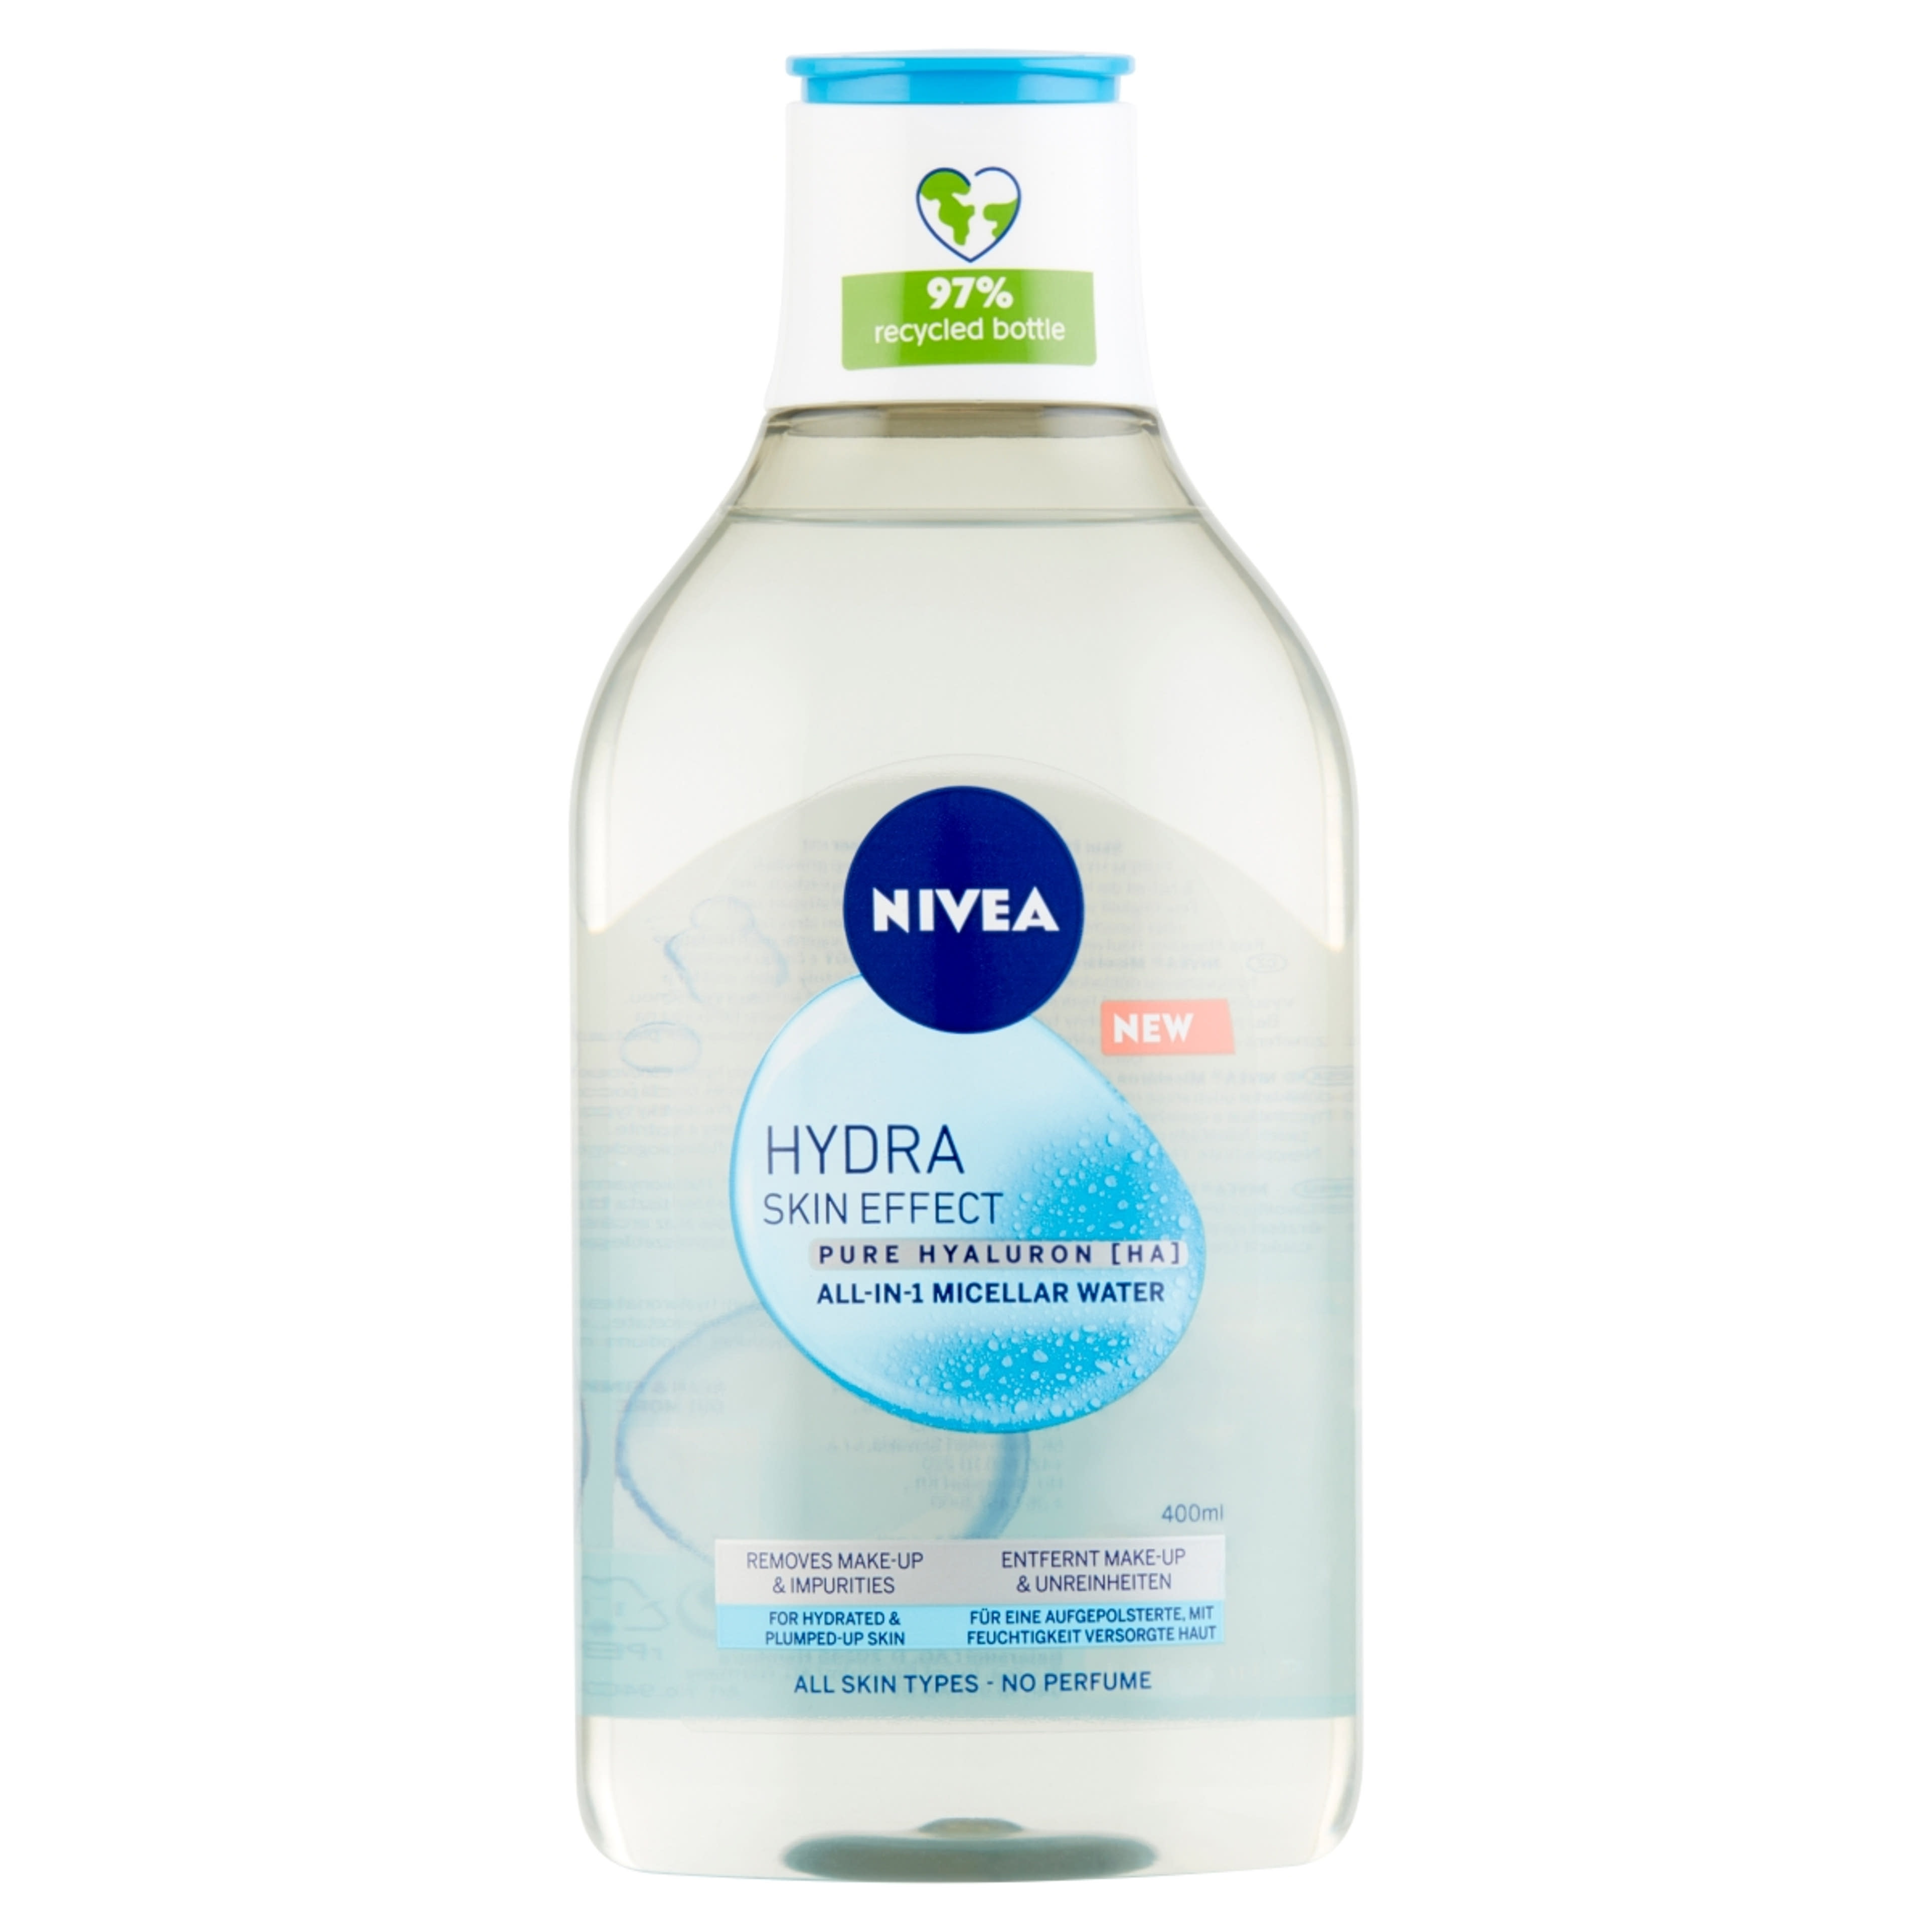 NIVEA Hydra Skin Effect micellás víz - 400 ml-1